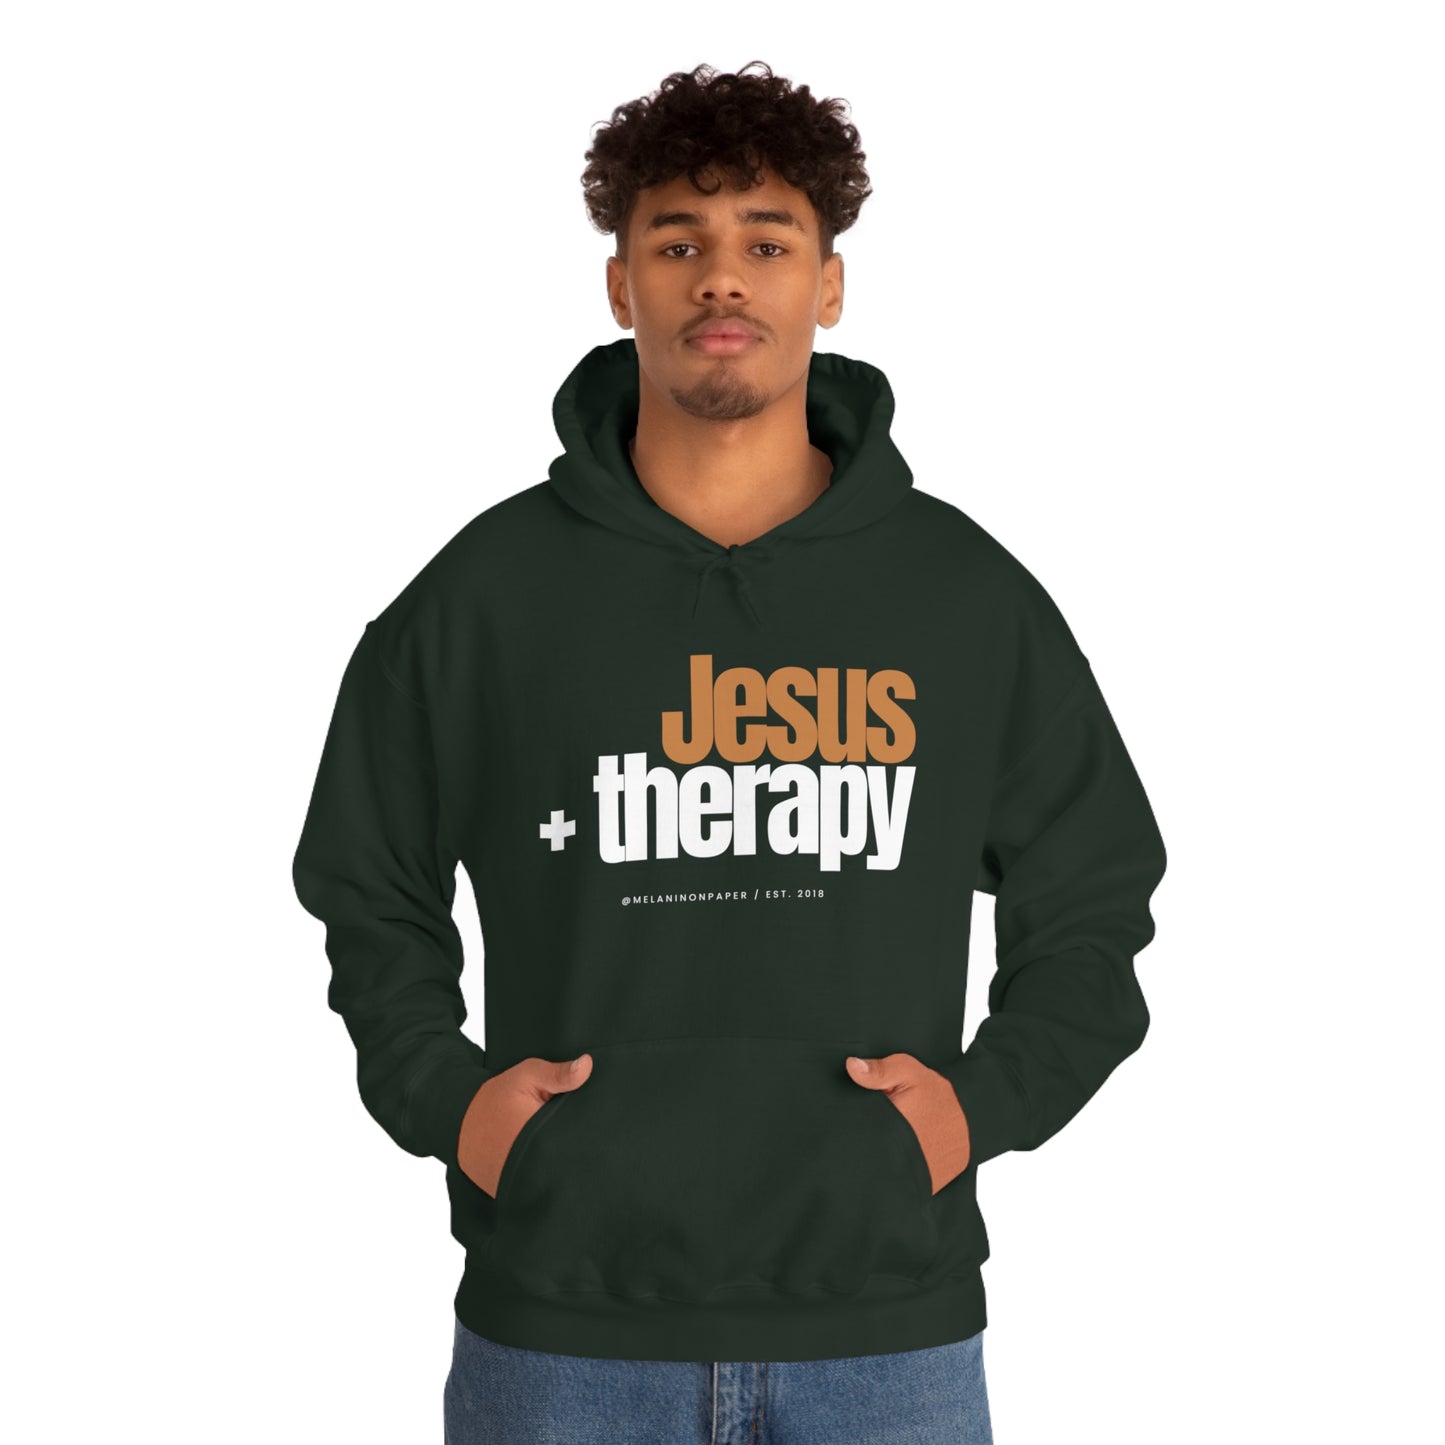 "Jesus + therapy" Unisex Heavy Blend™ Hooded Sweatshirt - Black, Chocolate, Navy Blue, Dark Gray, & Hunter Green Available